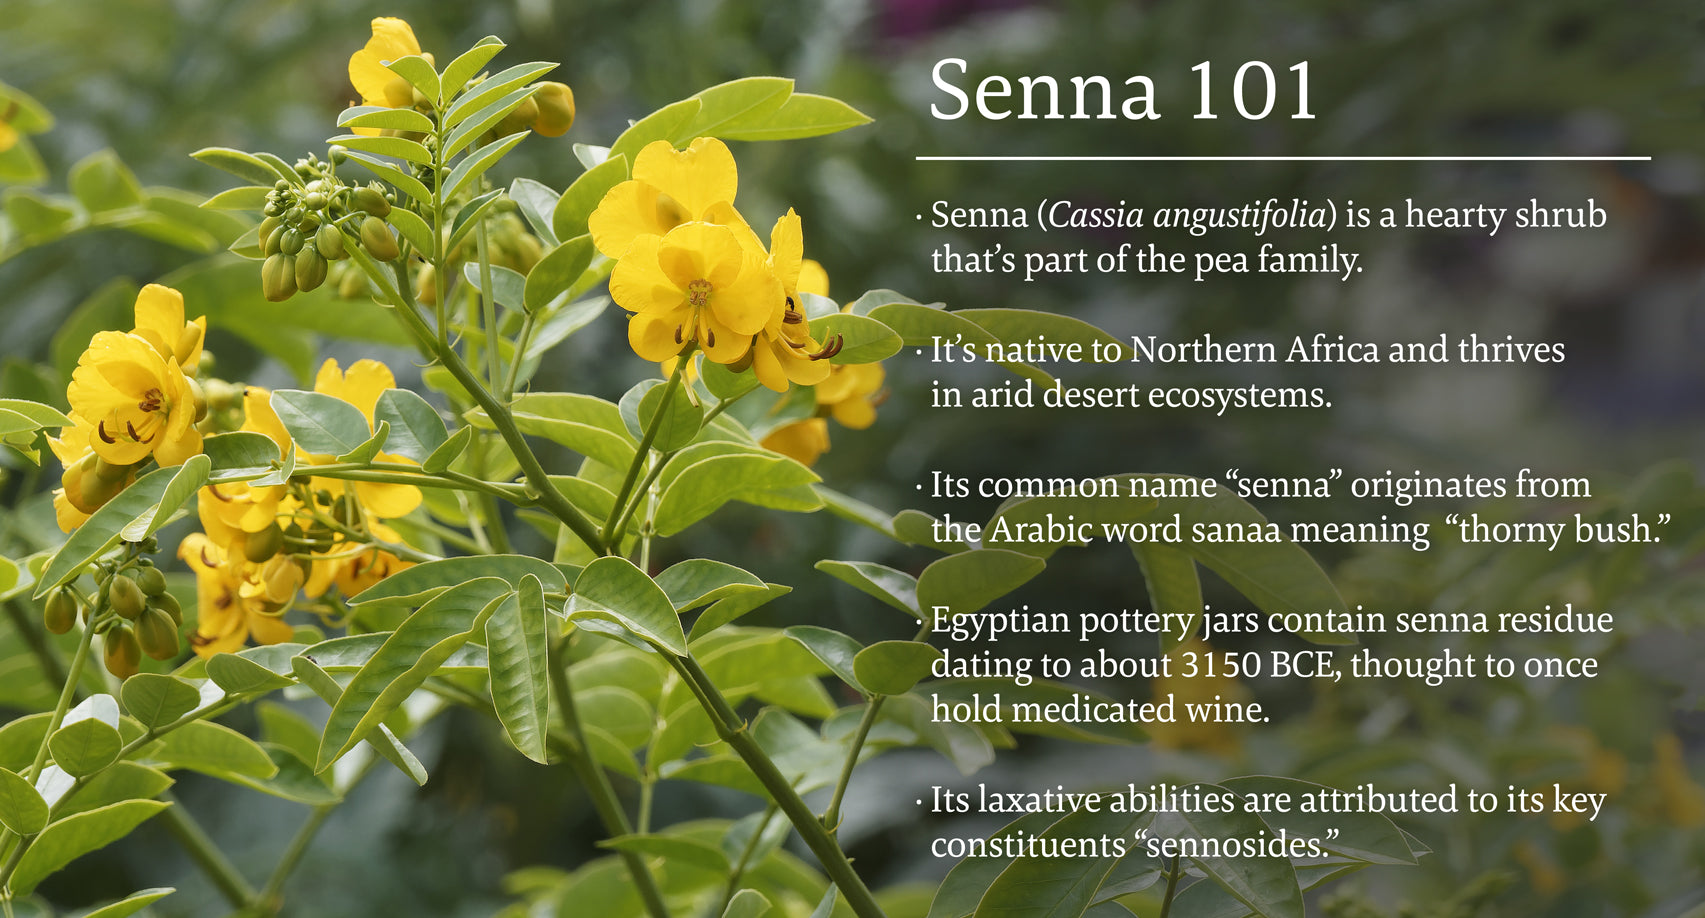 Senna 101 Infographic